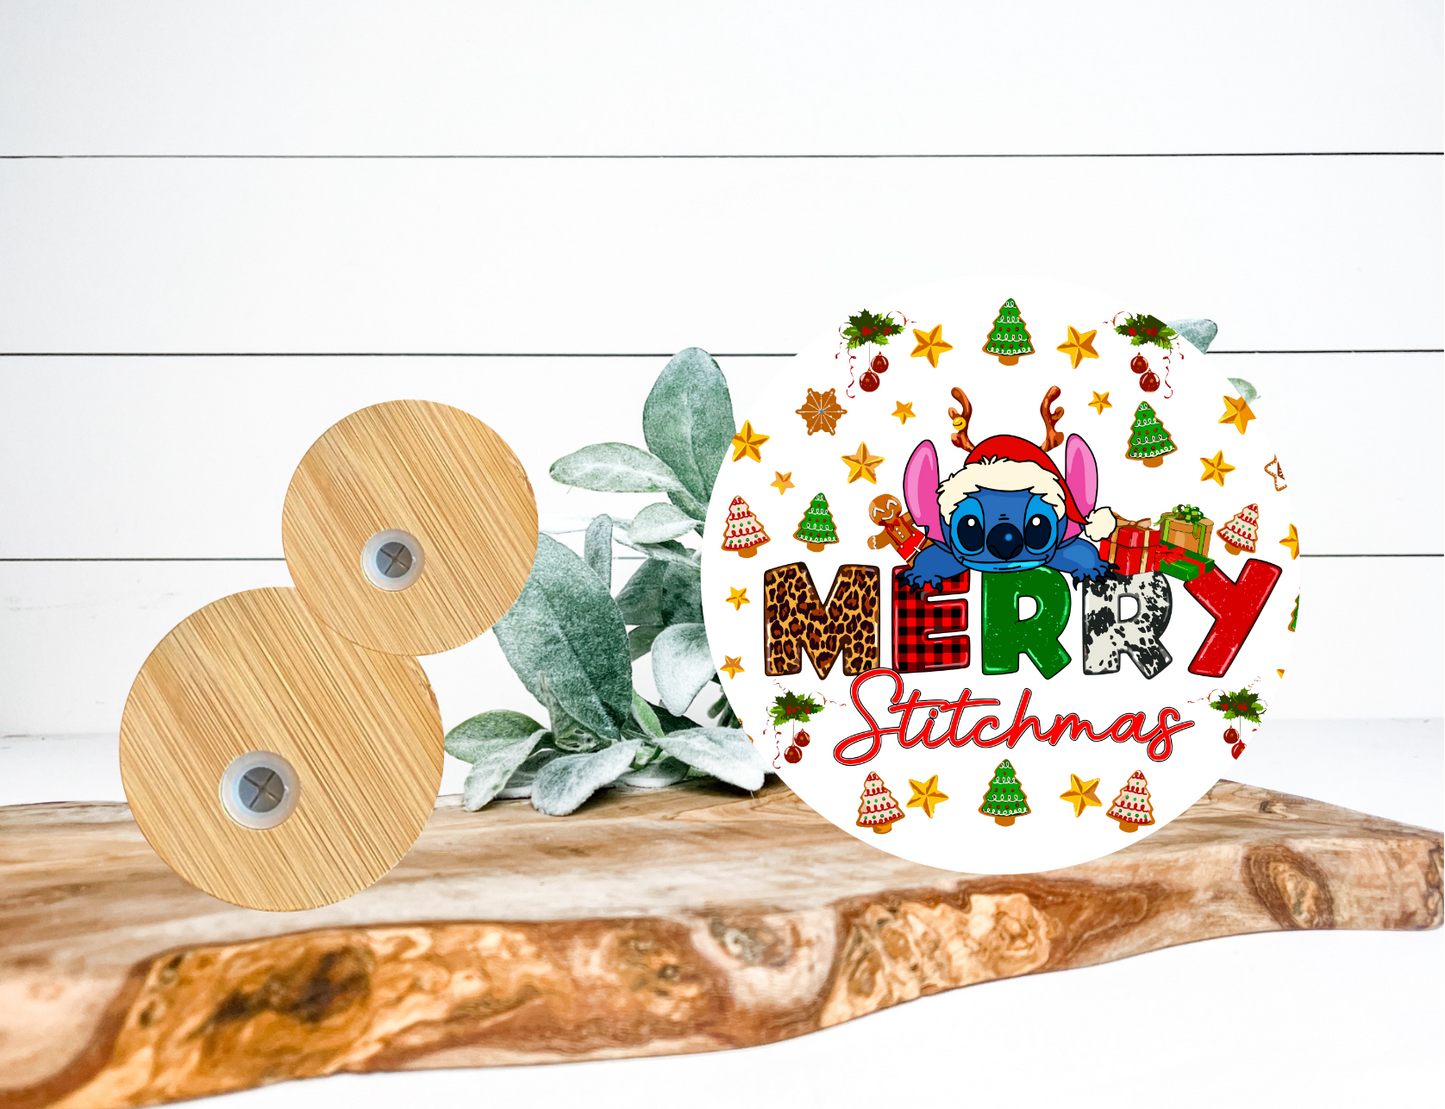 Merry Stitchmas Lid Wrap / Decal UVDTF